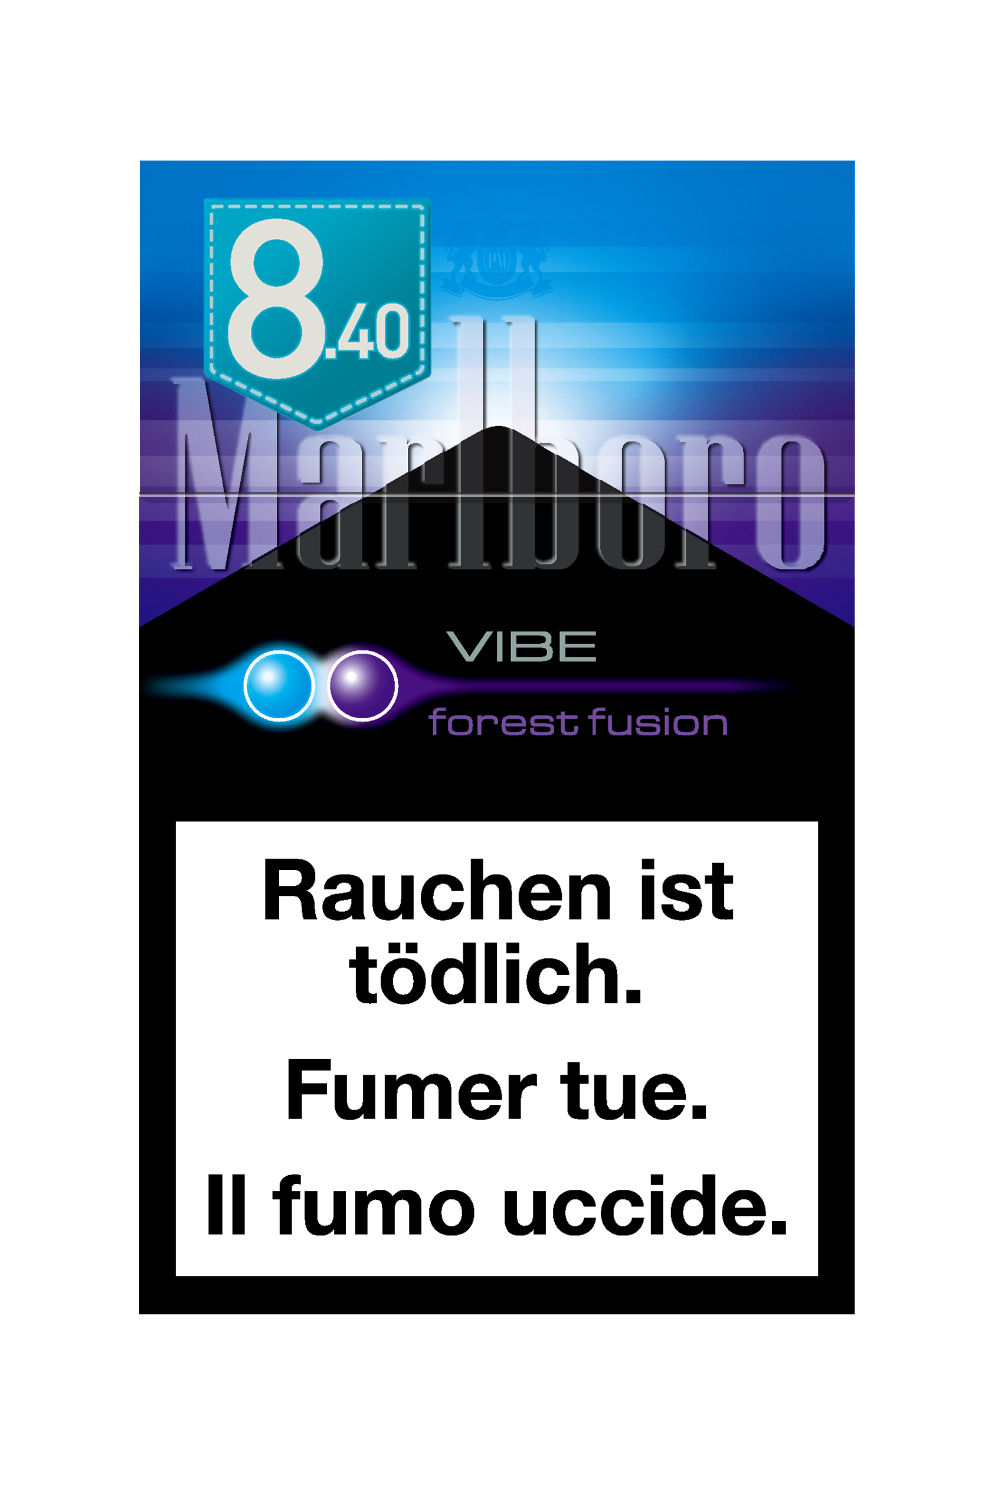 Marlboro Vibe Forest Fusion